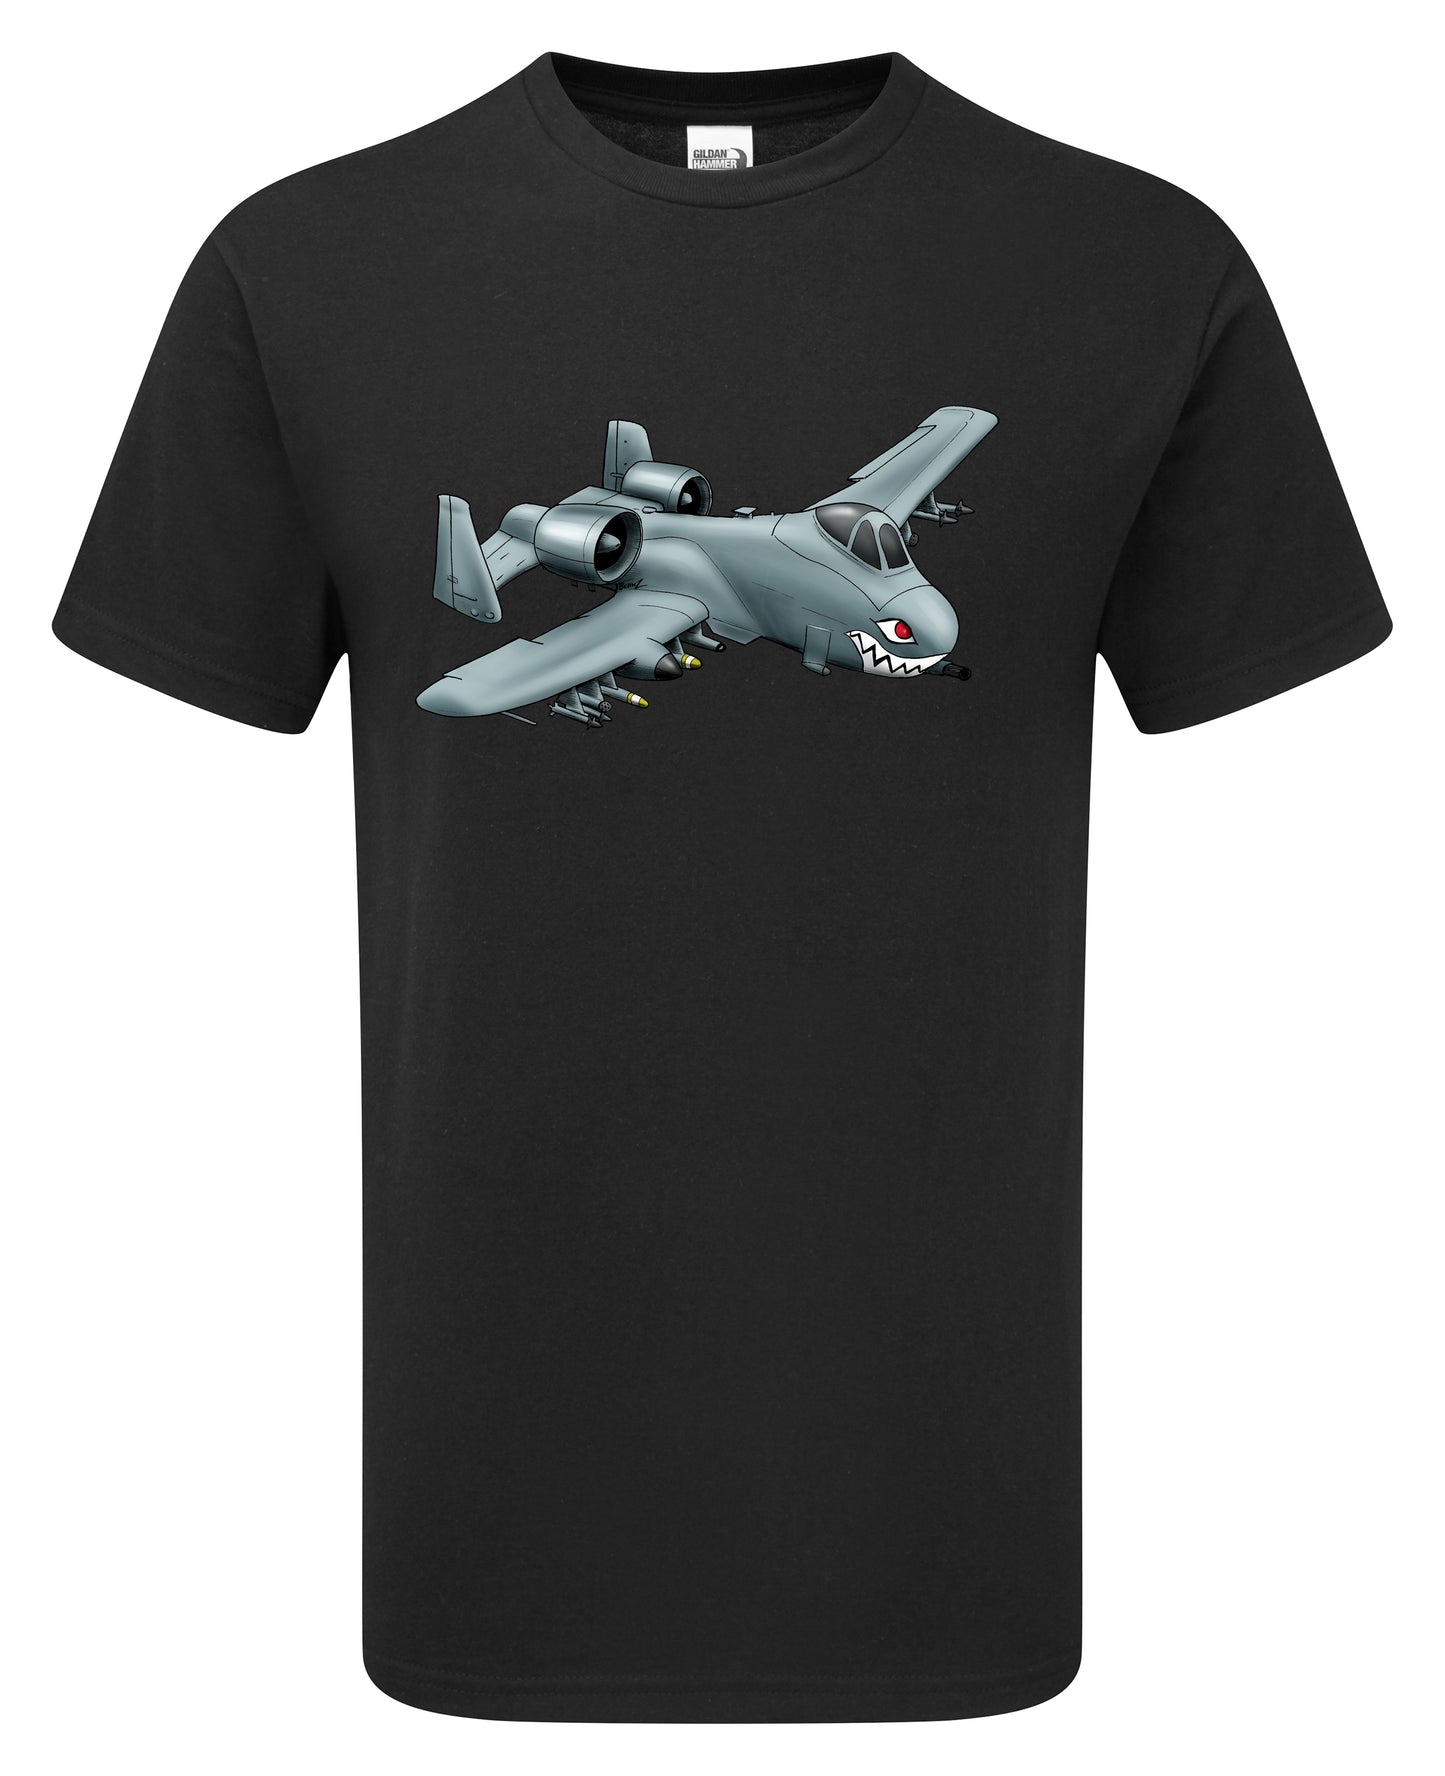 A10 Warthog Cartoon T-Shirt